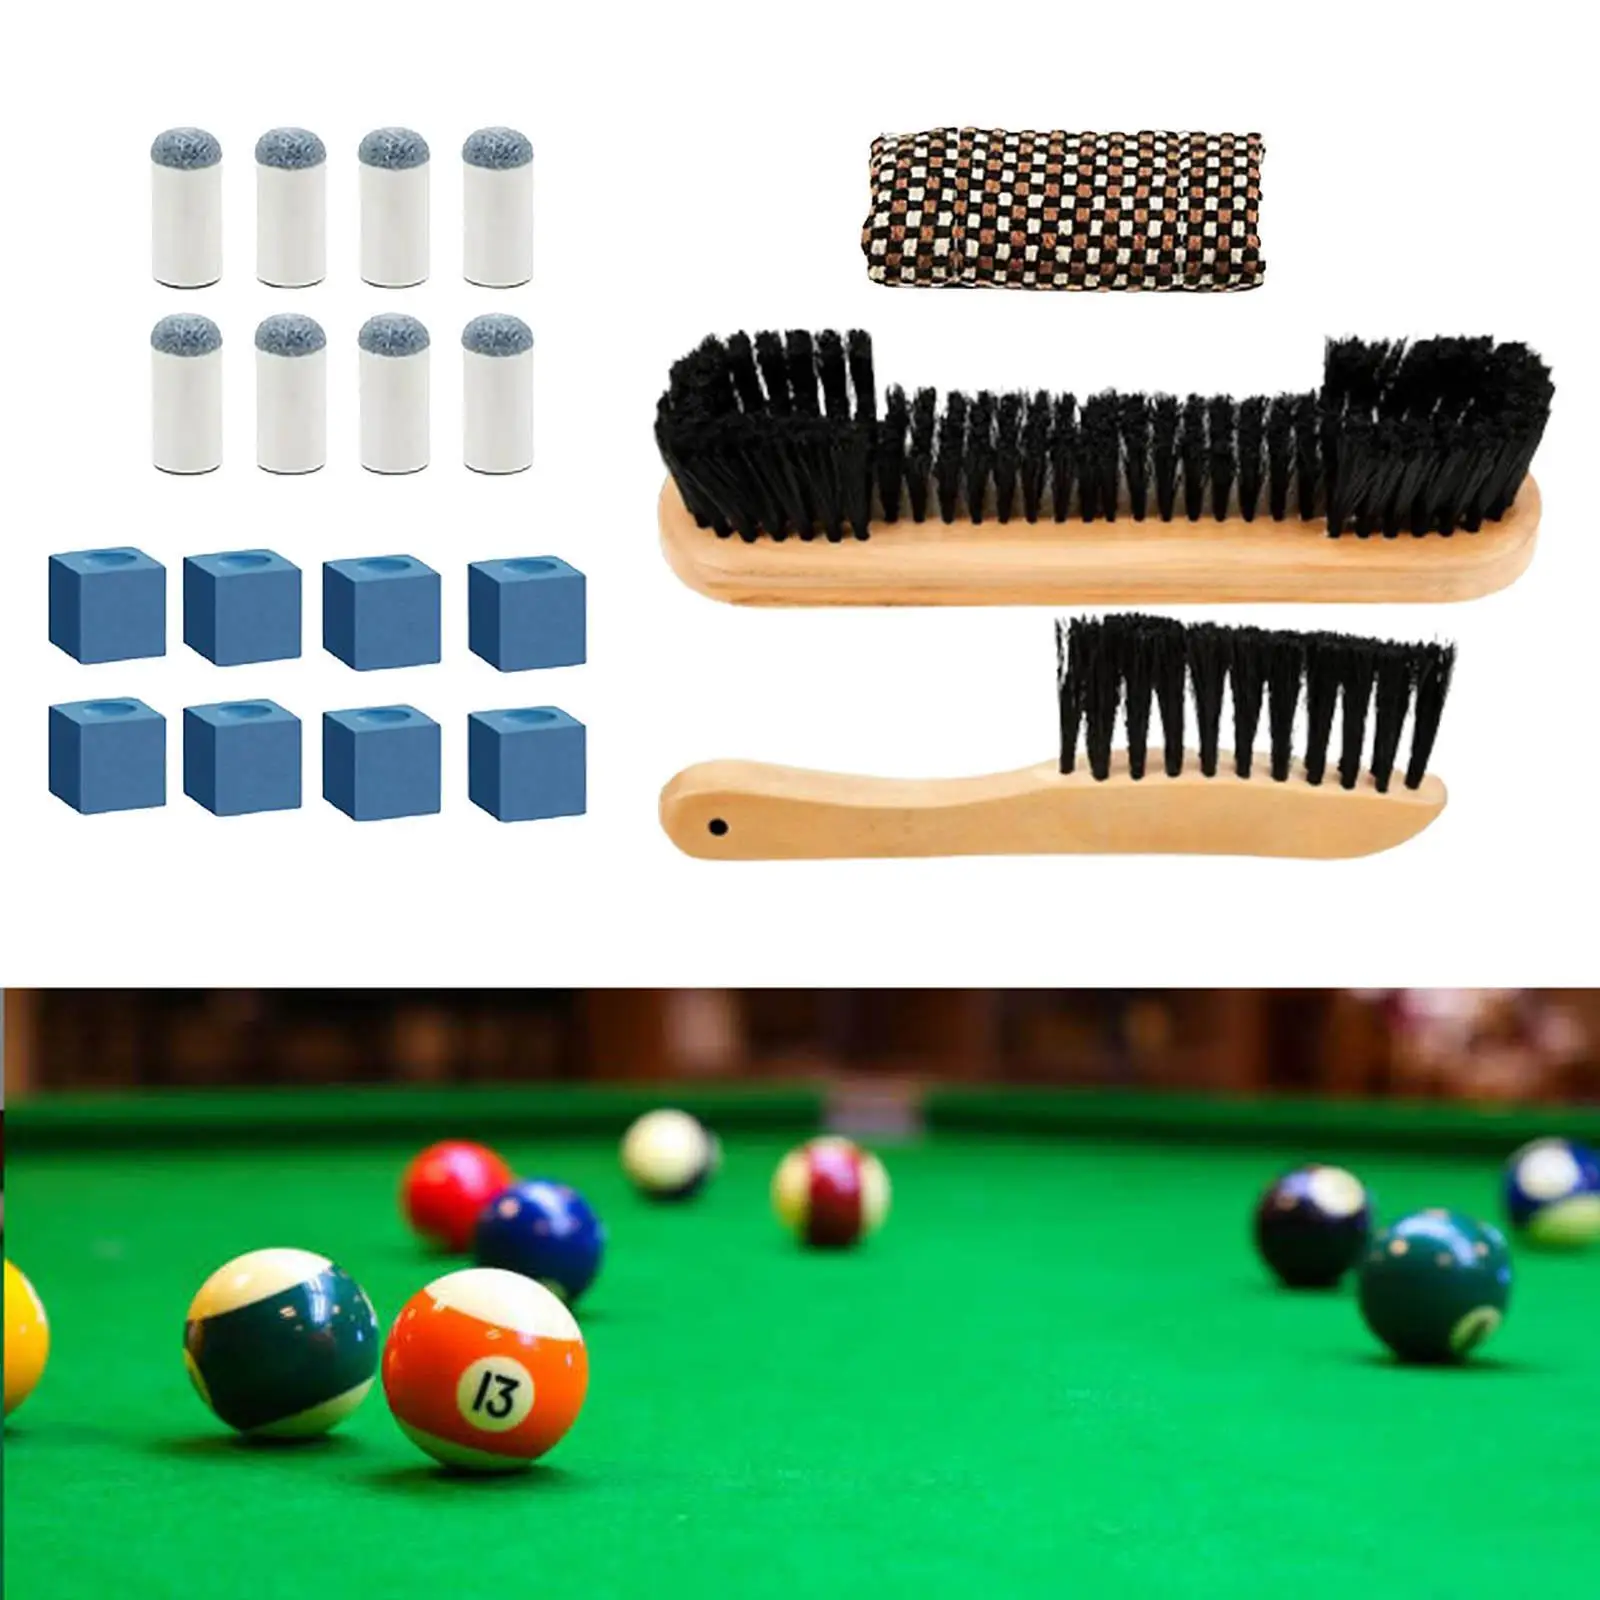 Billiard Pool Table Brush and Rail Brush Set Wipe Wooden Cleaning Brush Kit